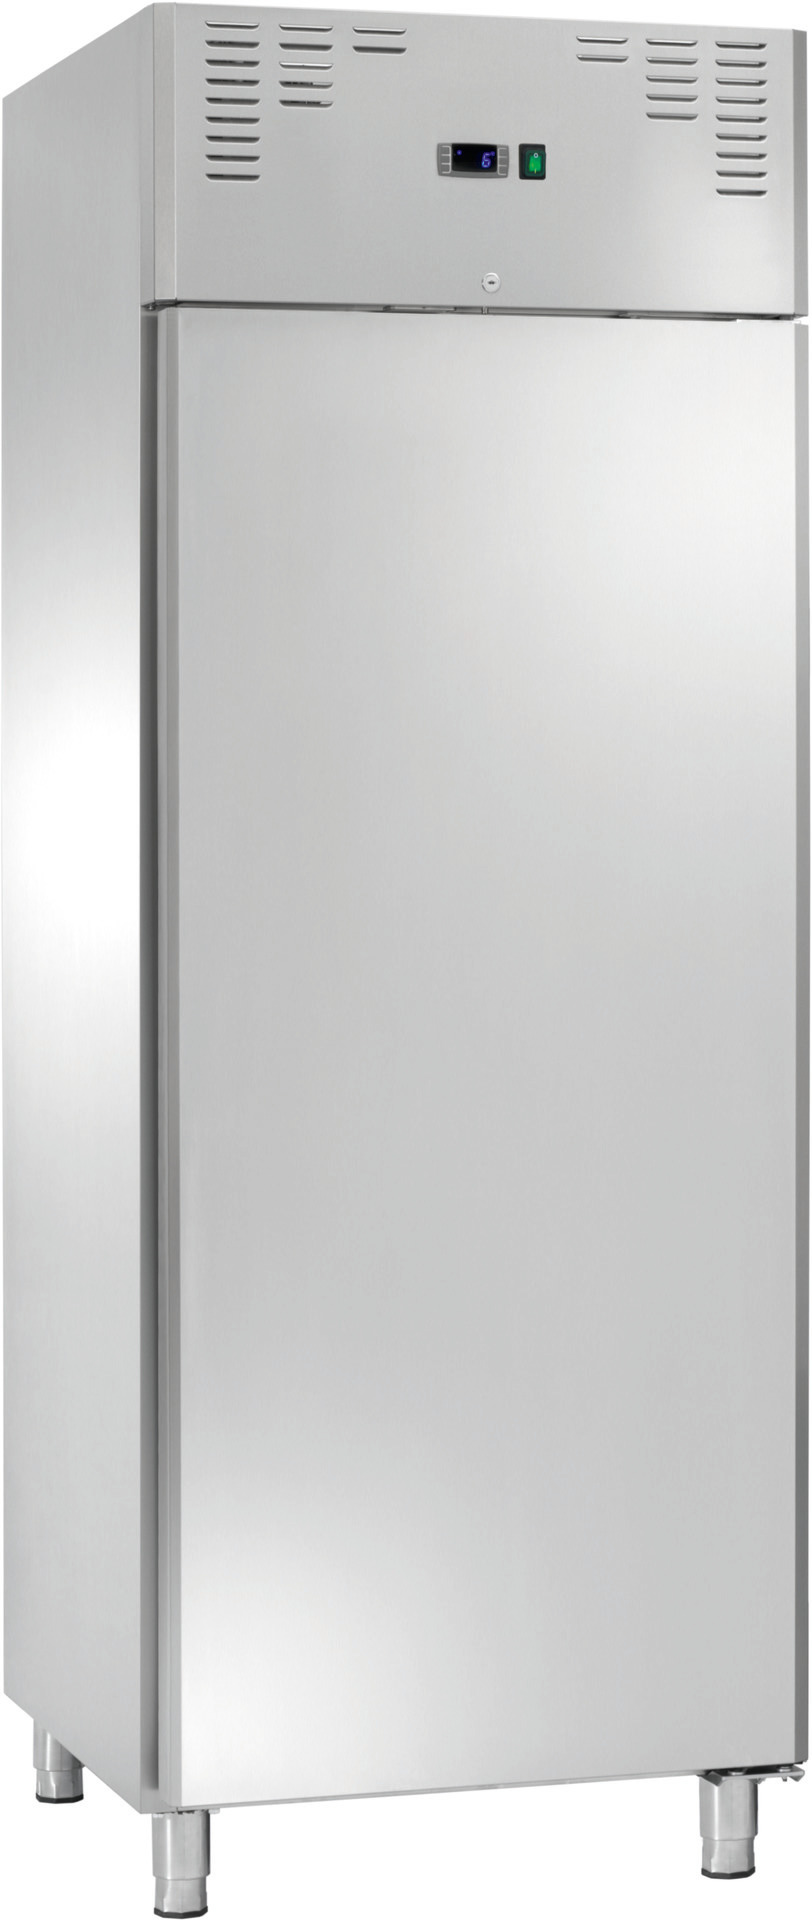 Kühlschrank 650 l GN 2/1